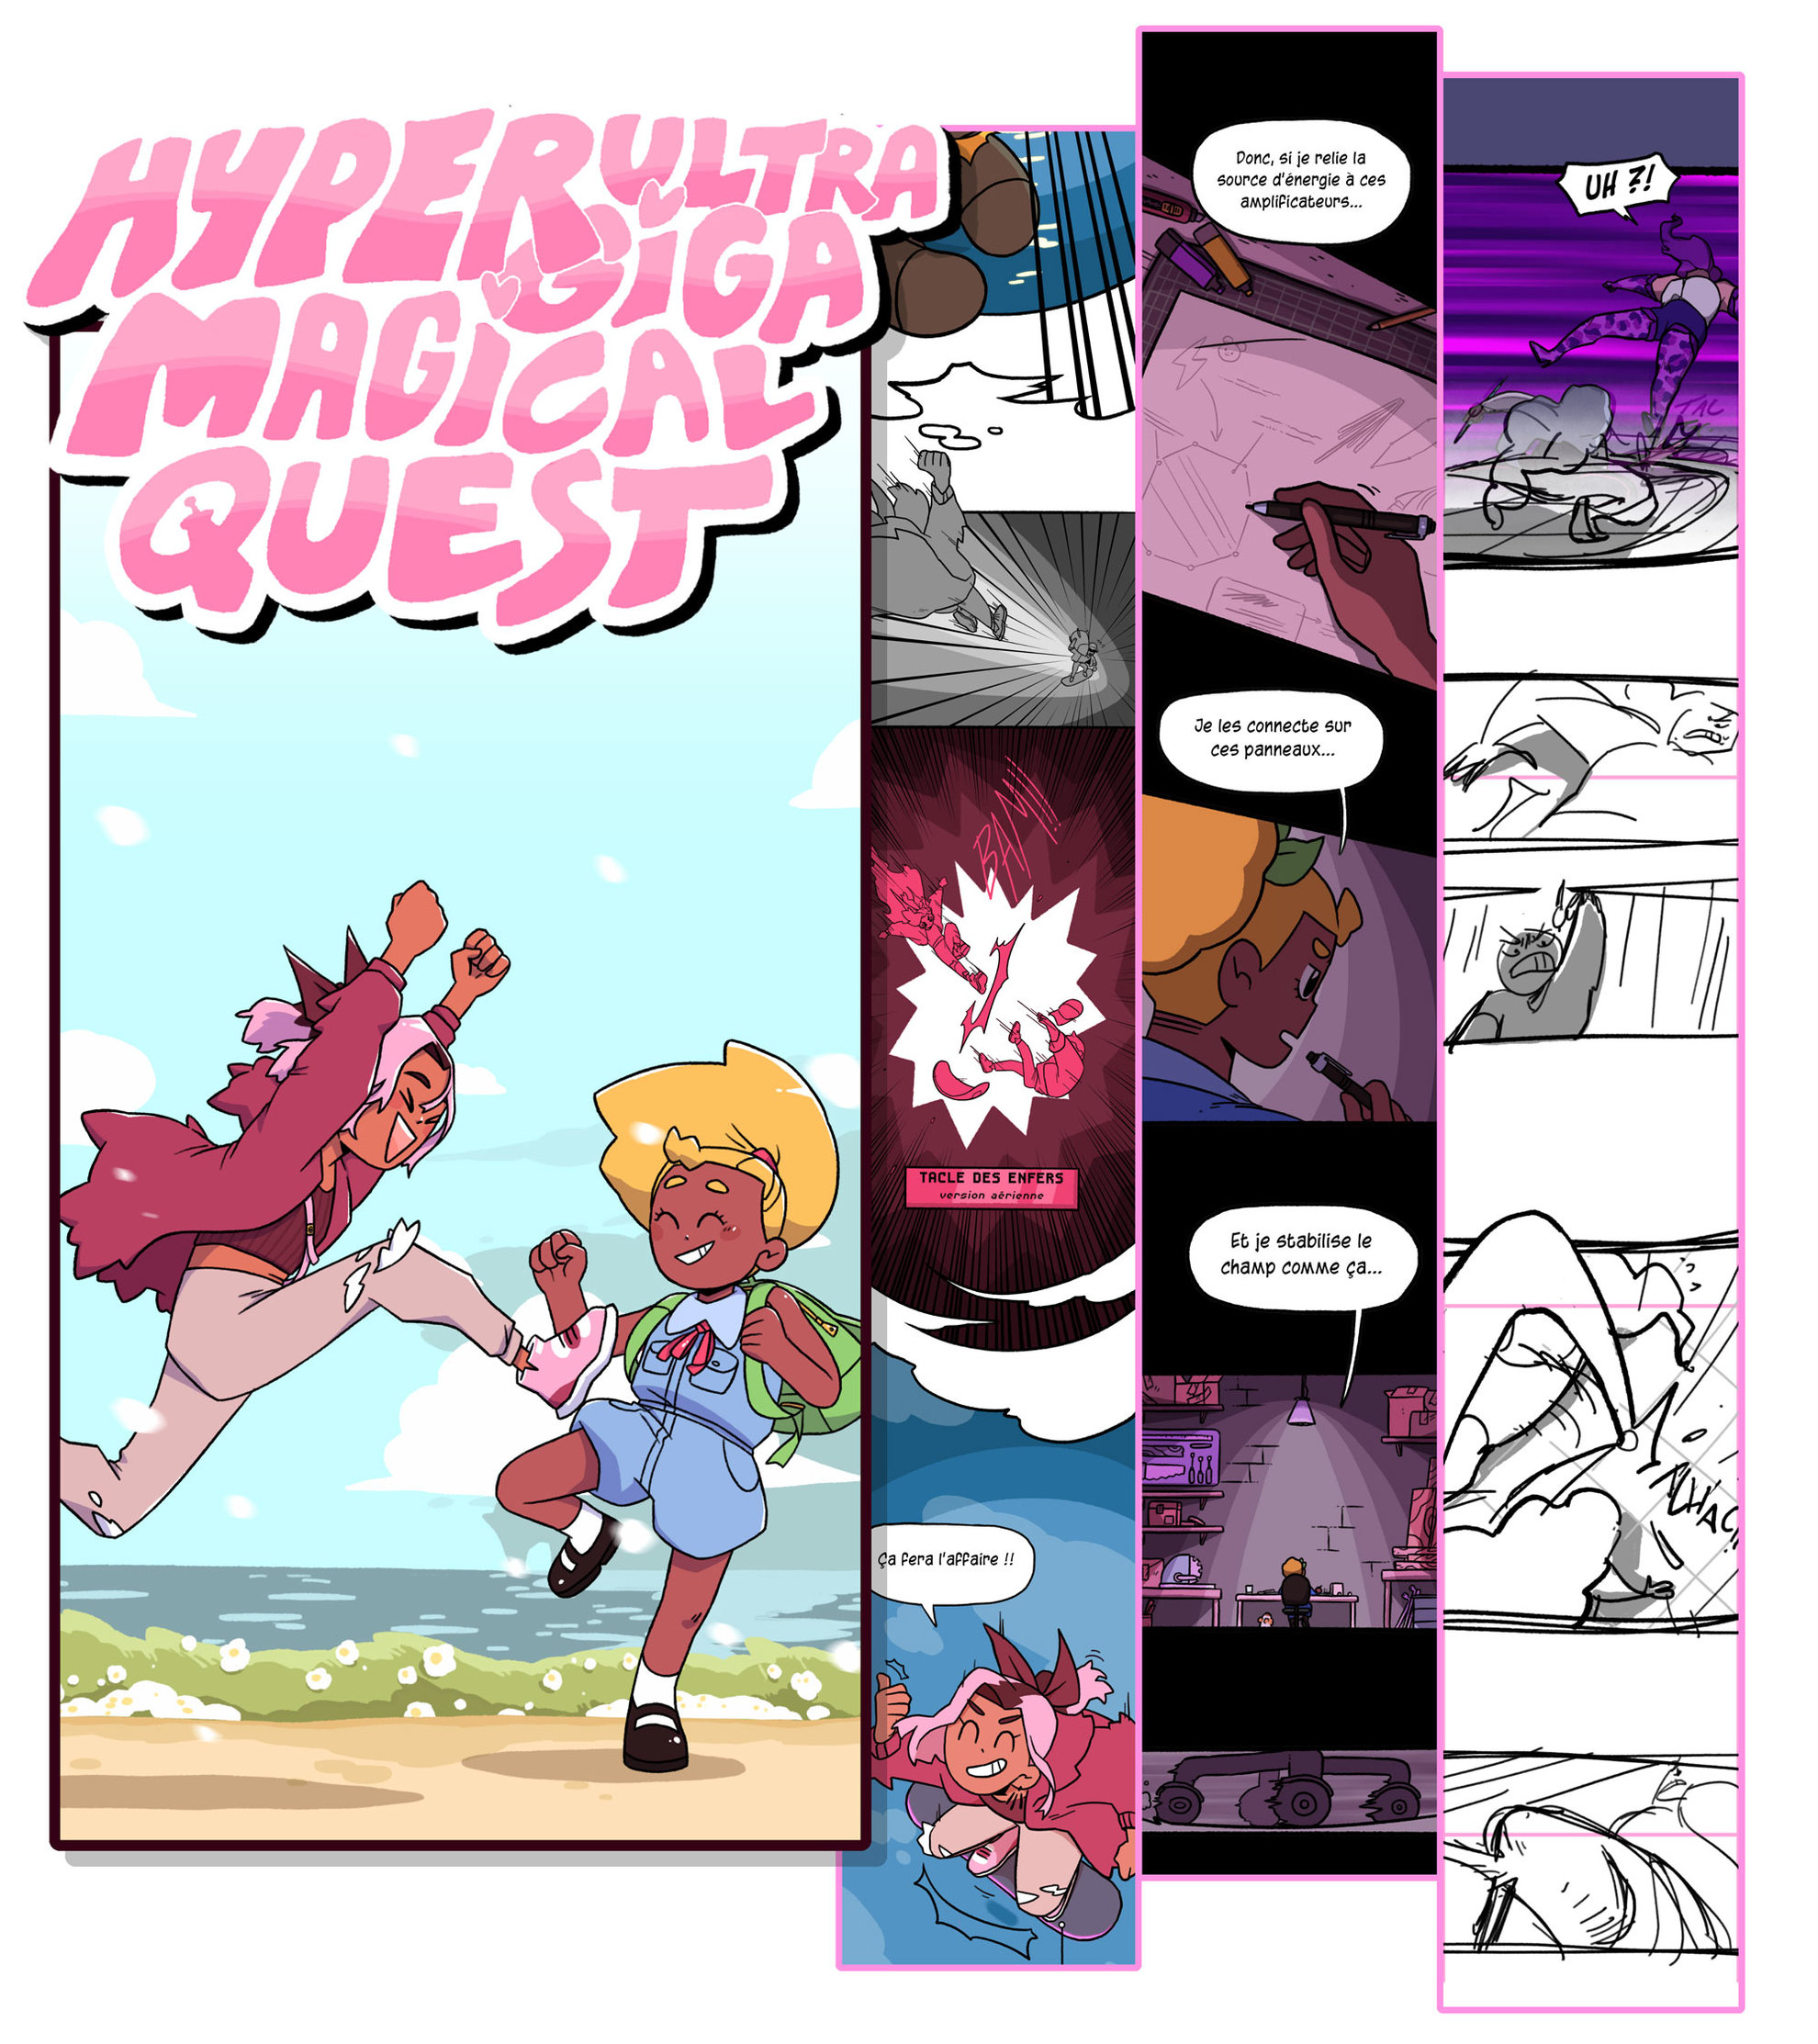 Hyper Ultra Giga Magical Quest - bande-dessinée en ligne publiée par Naver Webtoon, 2020-2021